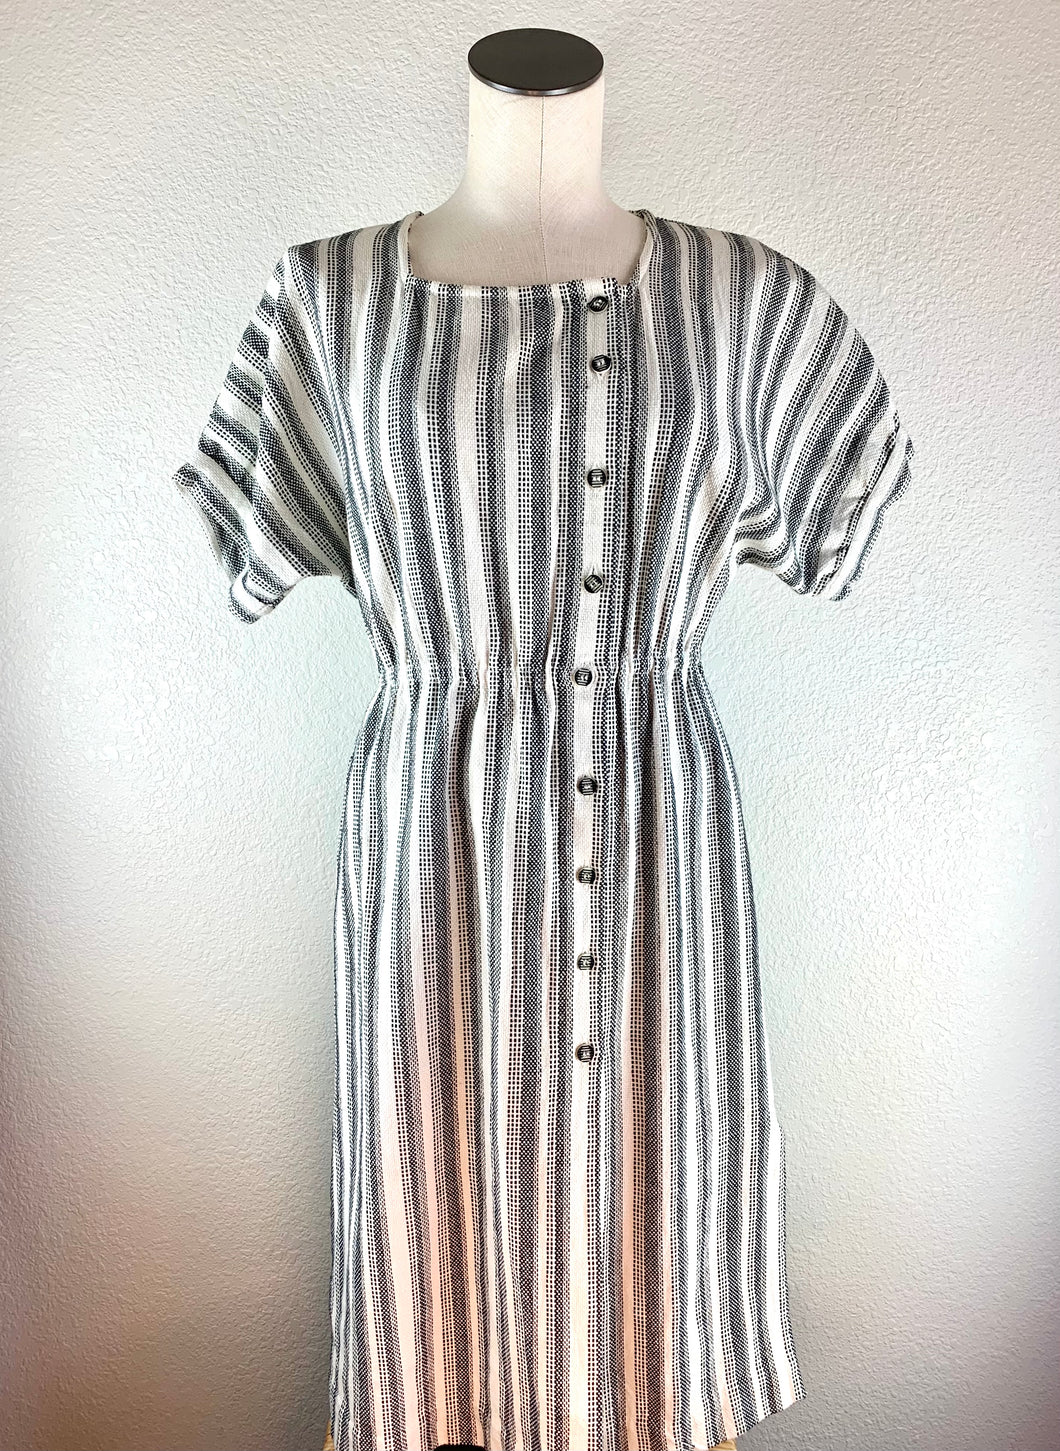 Intropia Striped Cotton Weave Dress size 38/6